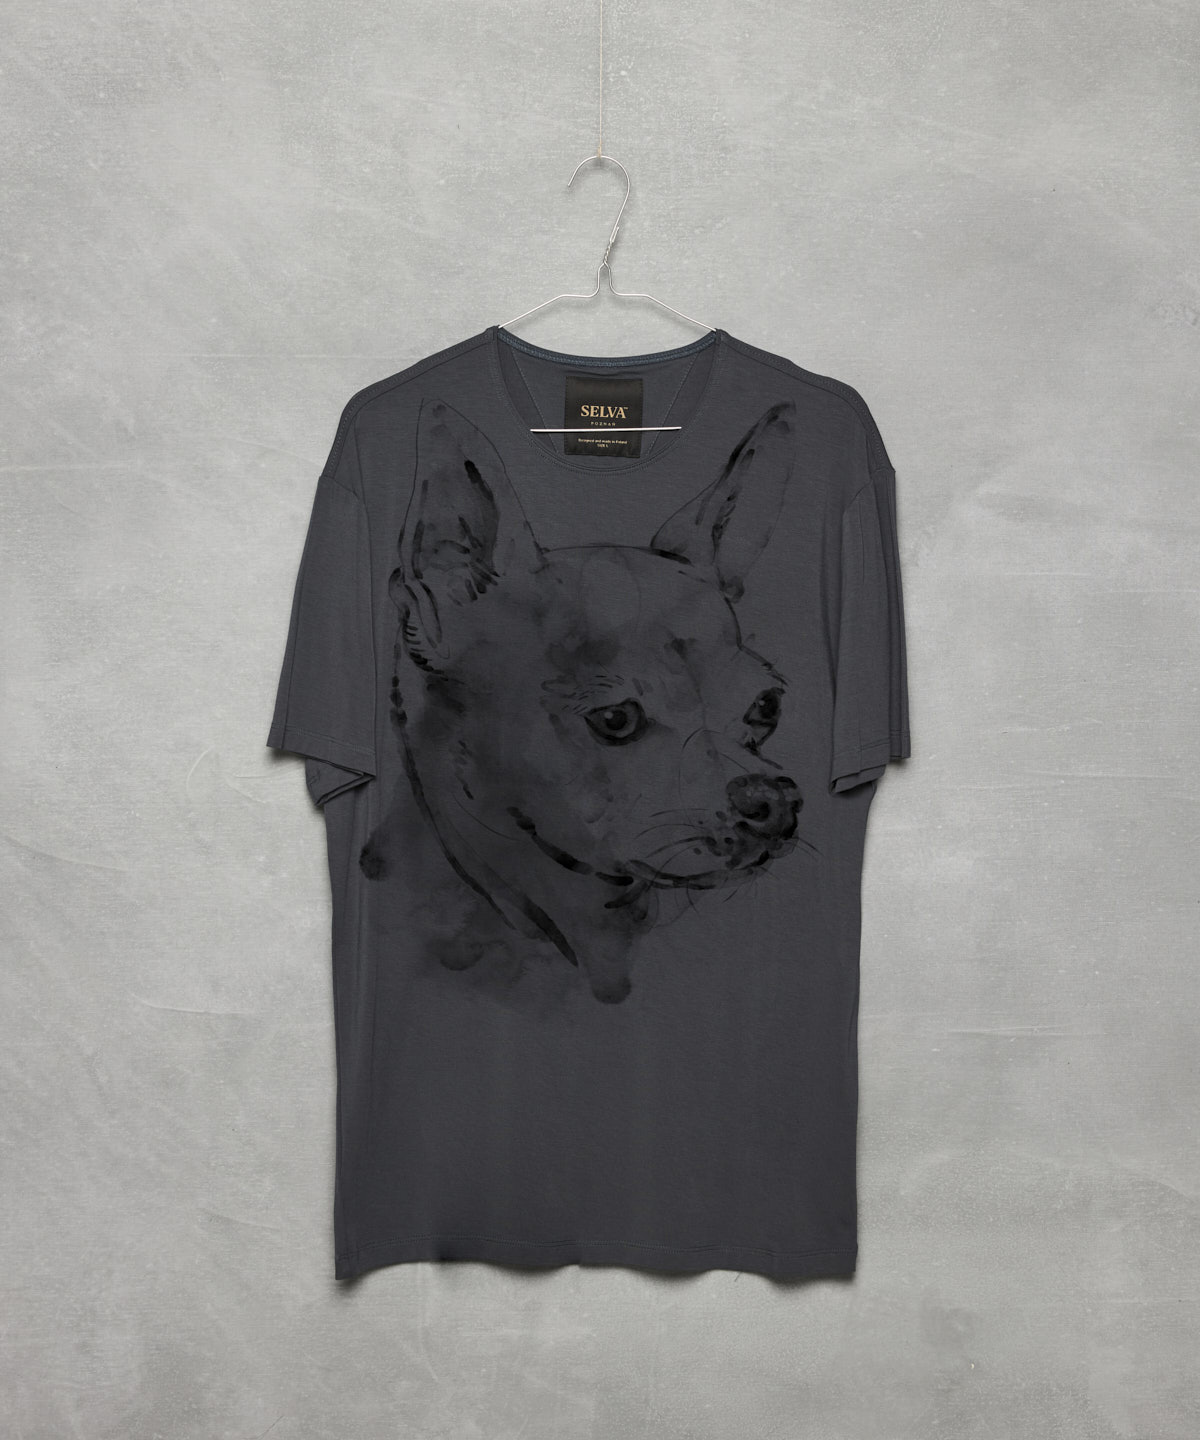 Chihuahua dark cool gray t-shirt MAN